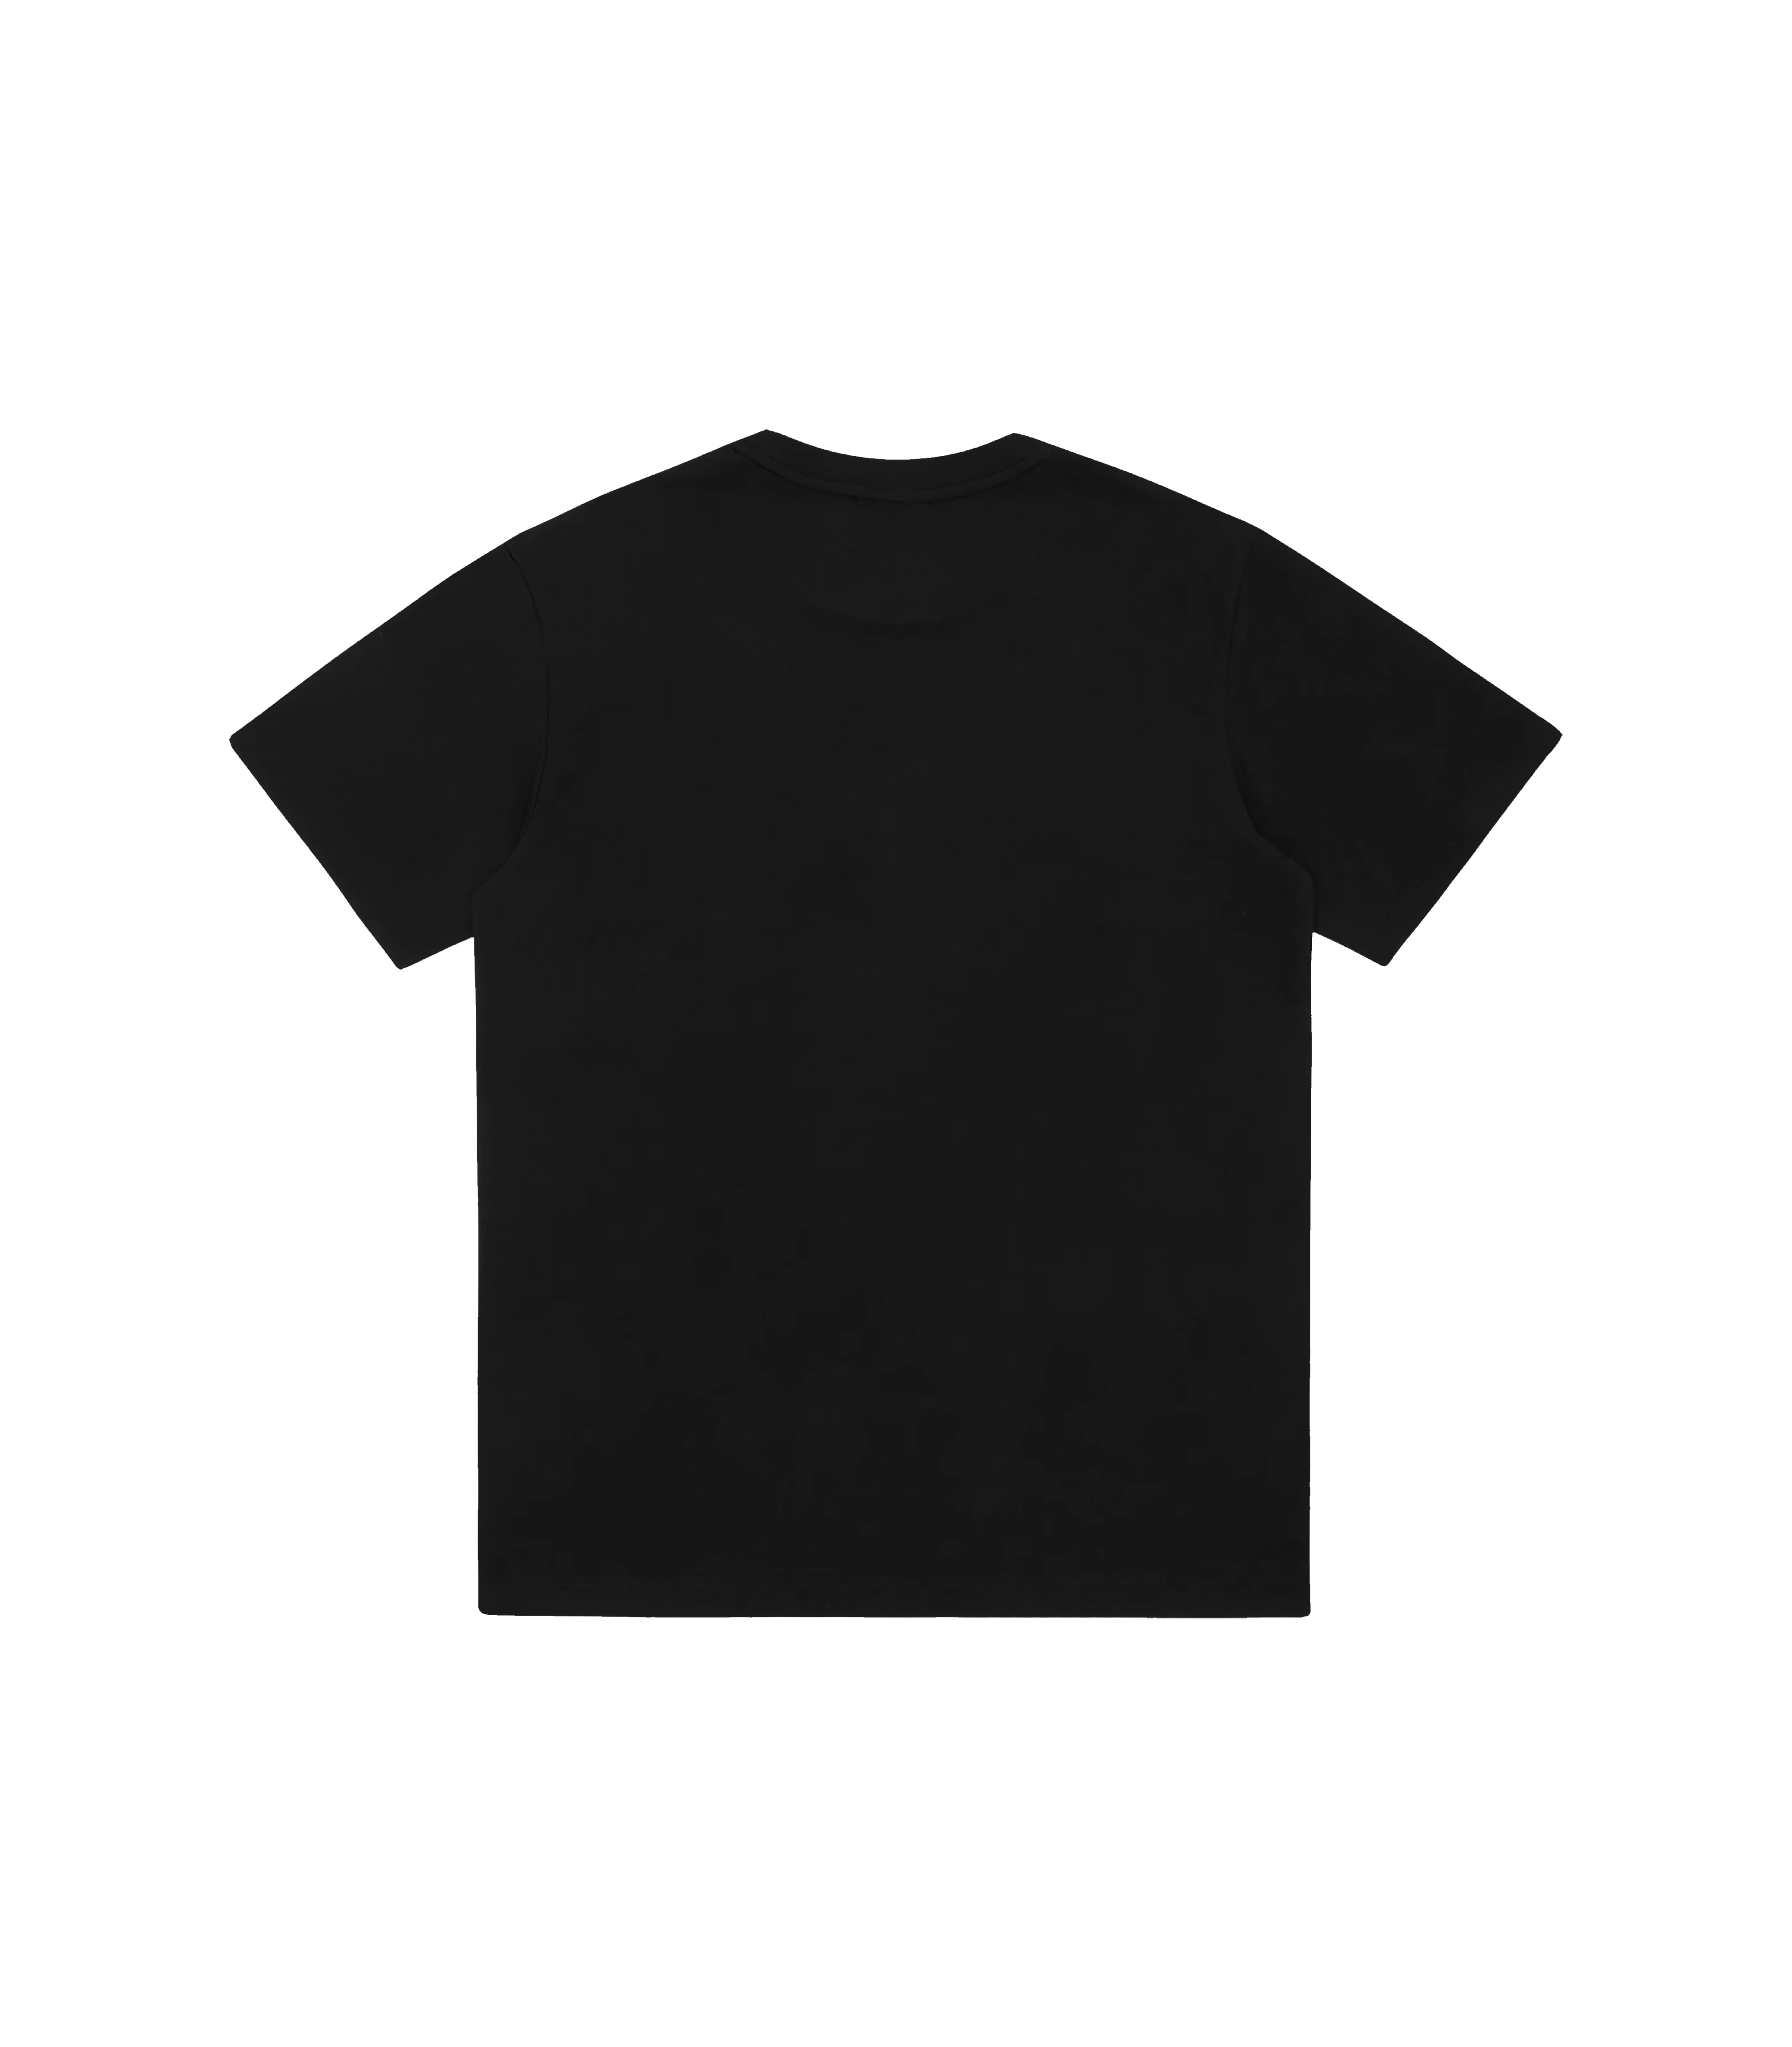 Zorro Stuff T-Shirts Inspiration T-Shirt Black